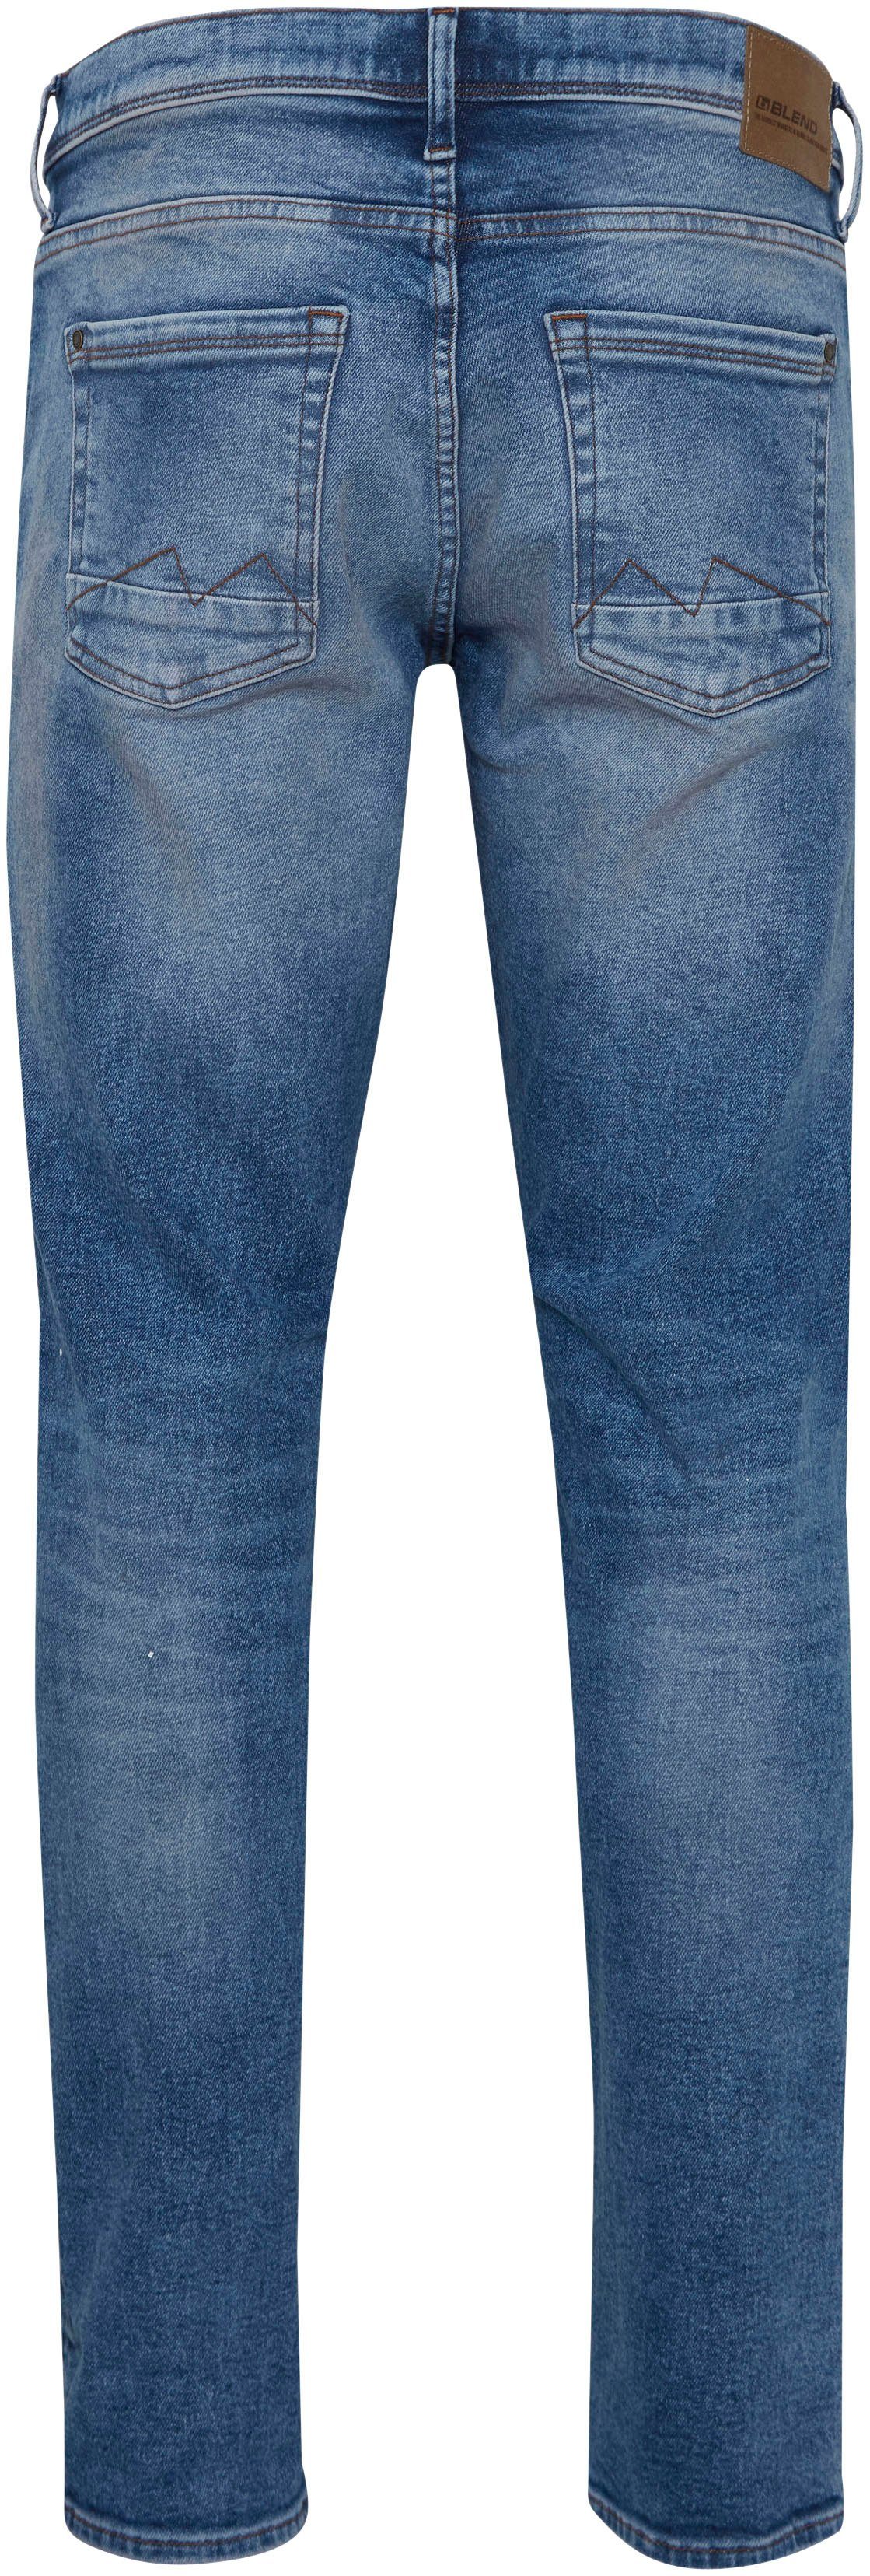 Blend 5-Pocket-Jeans BL Jeans blue Blizzard Multiflex